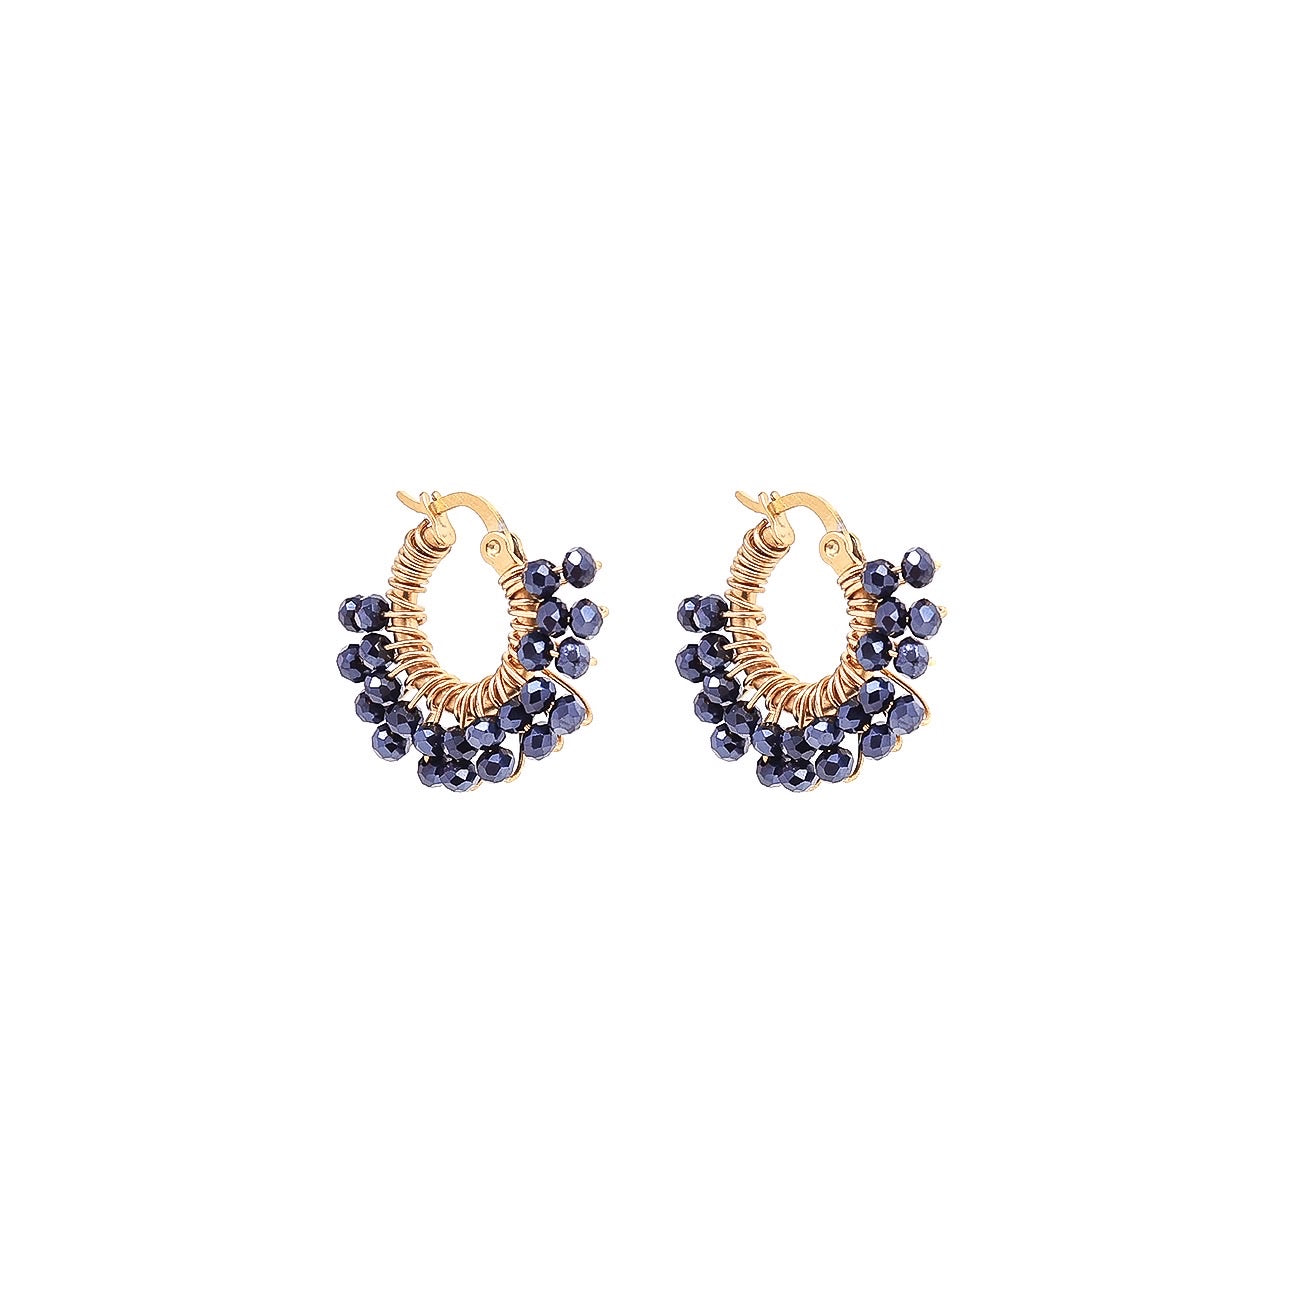 Tiny Glam loop earrings - Midnight blue to black